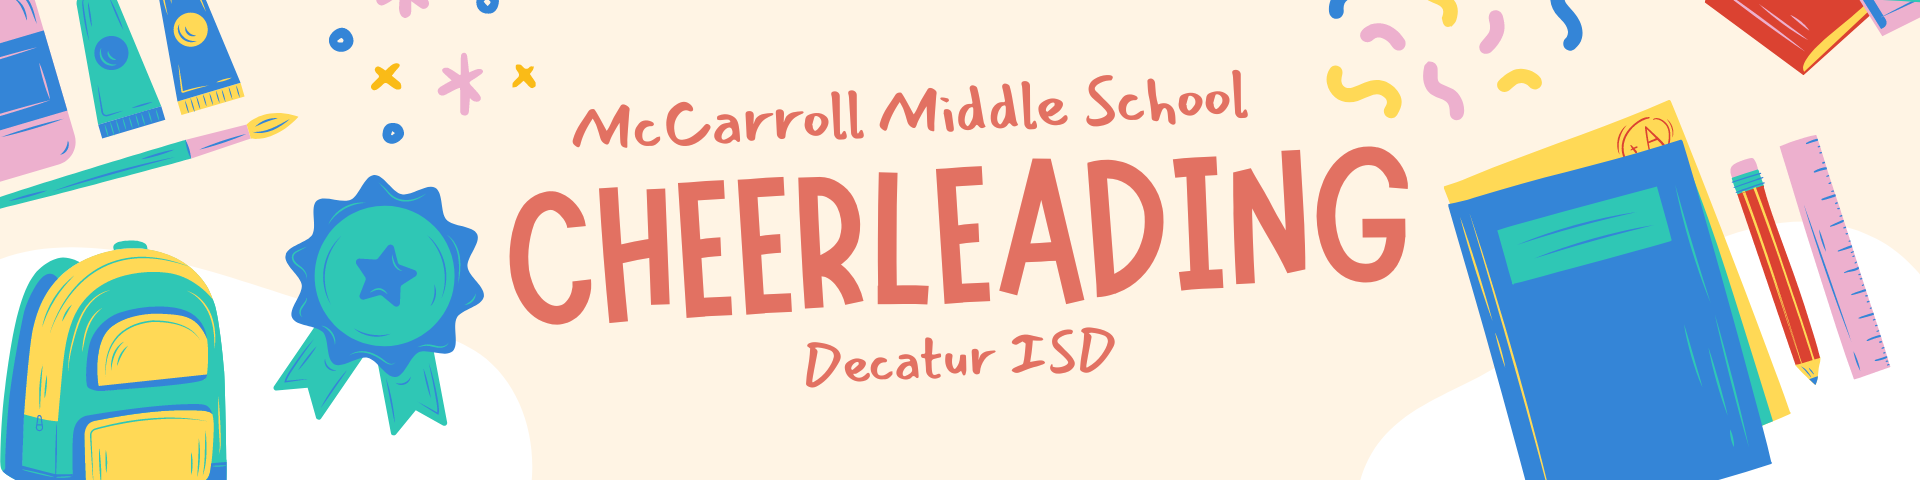 McCarroll Middle School Cheerleading Decatur ISD banner